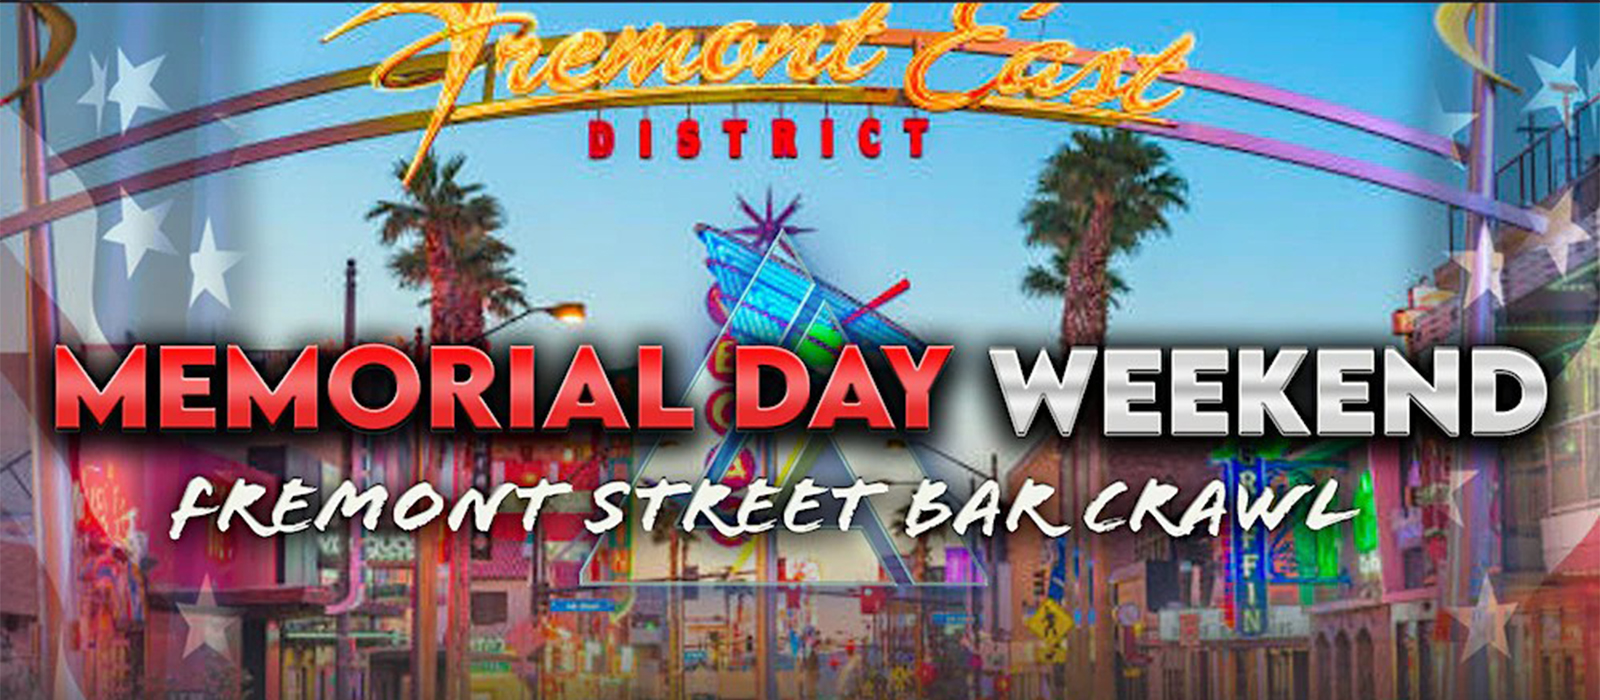 Memorial Day Weekend Fremont Street Bar Crawl banner